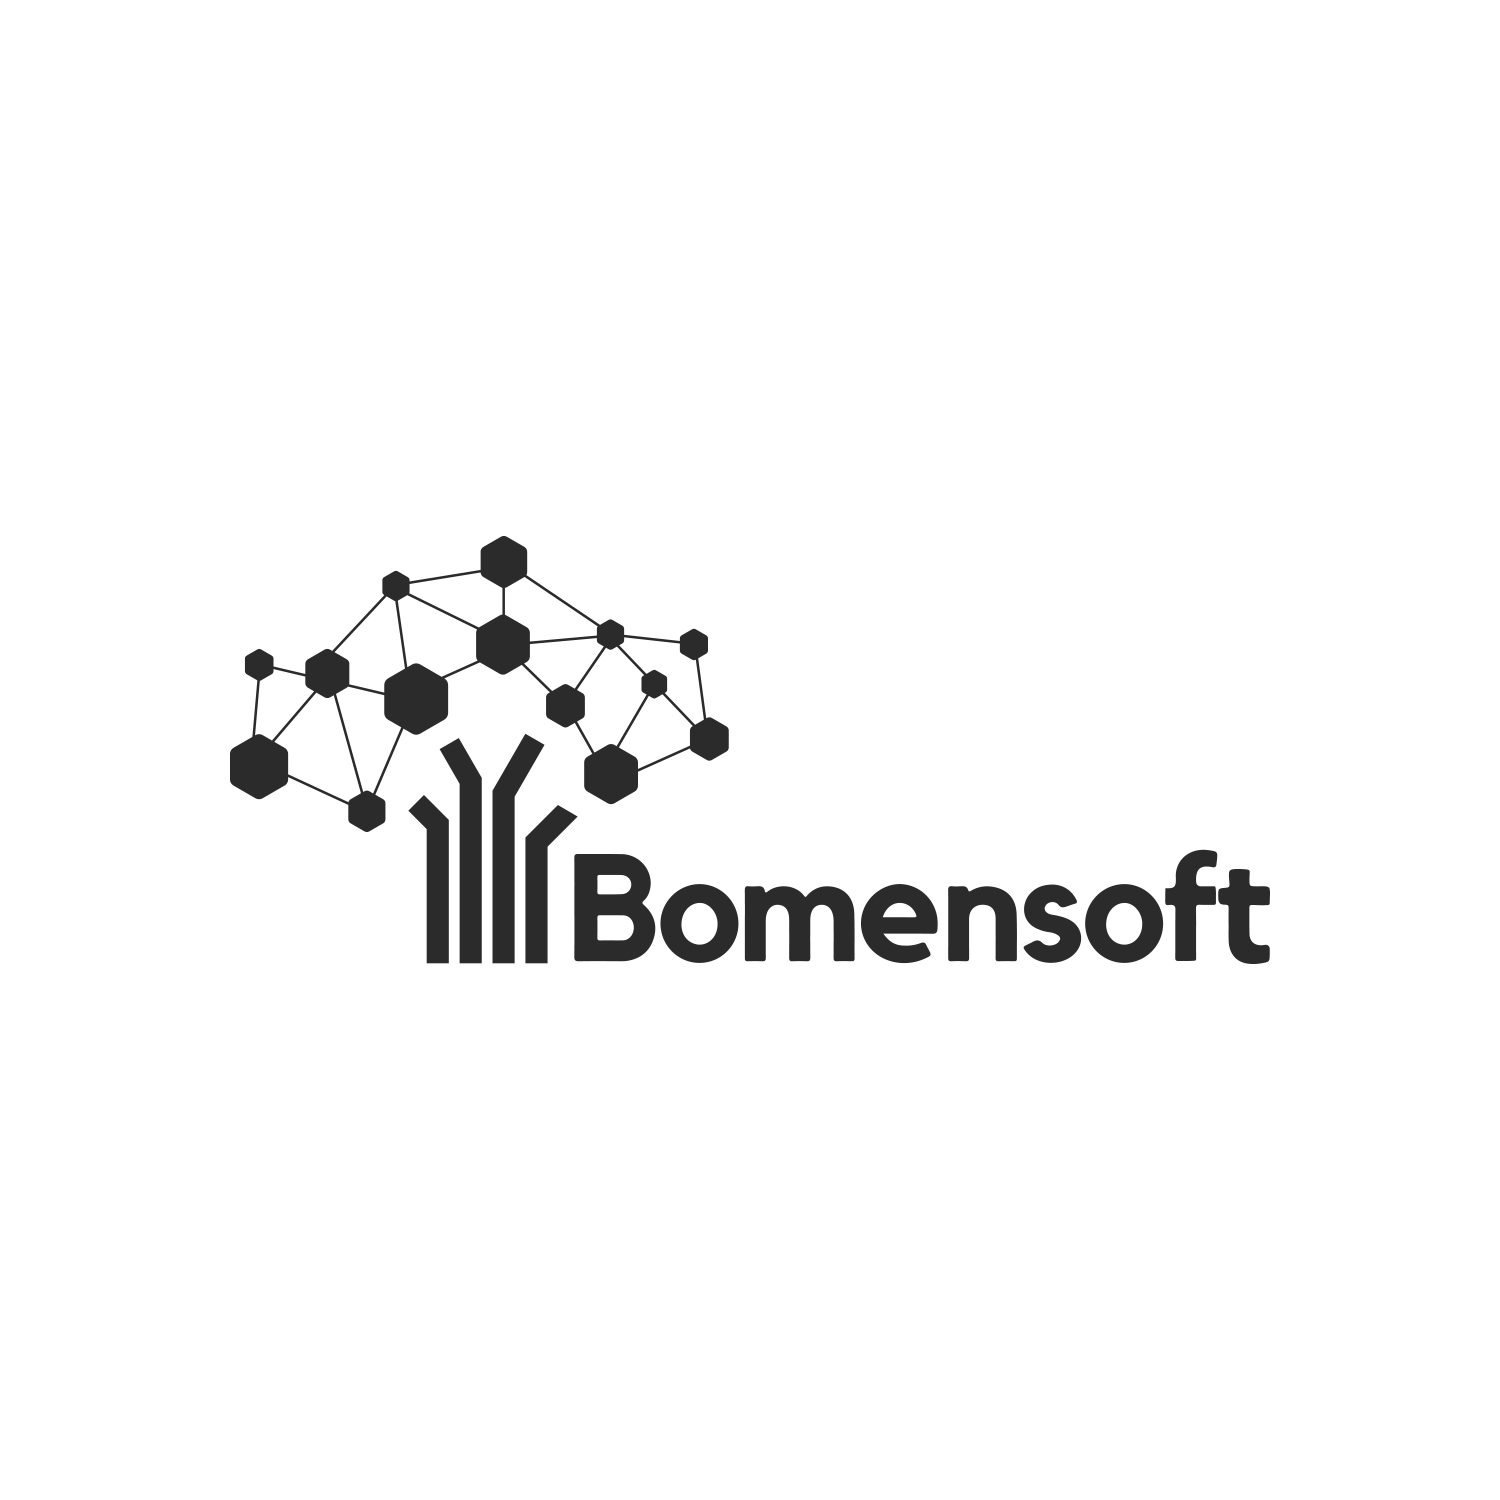 Bomensoft Logo